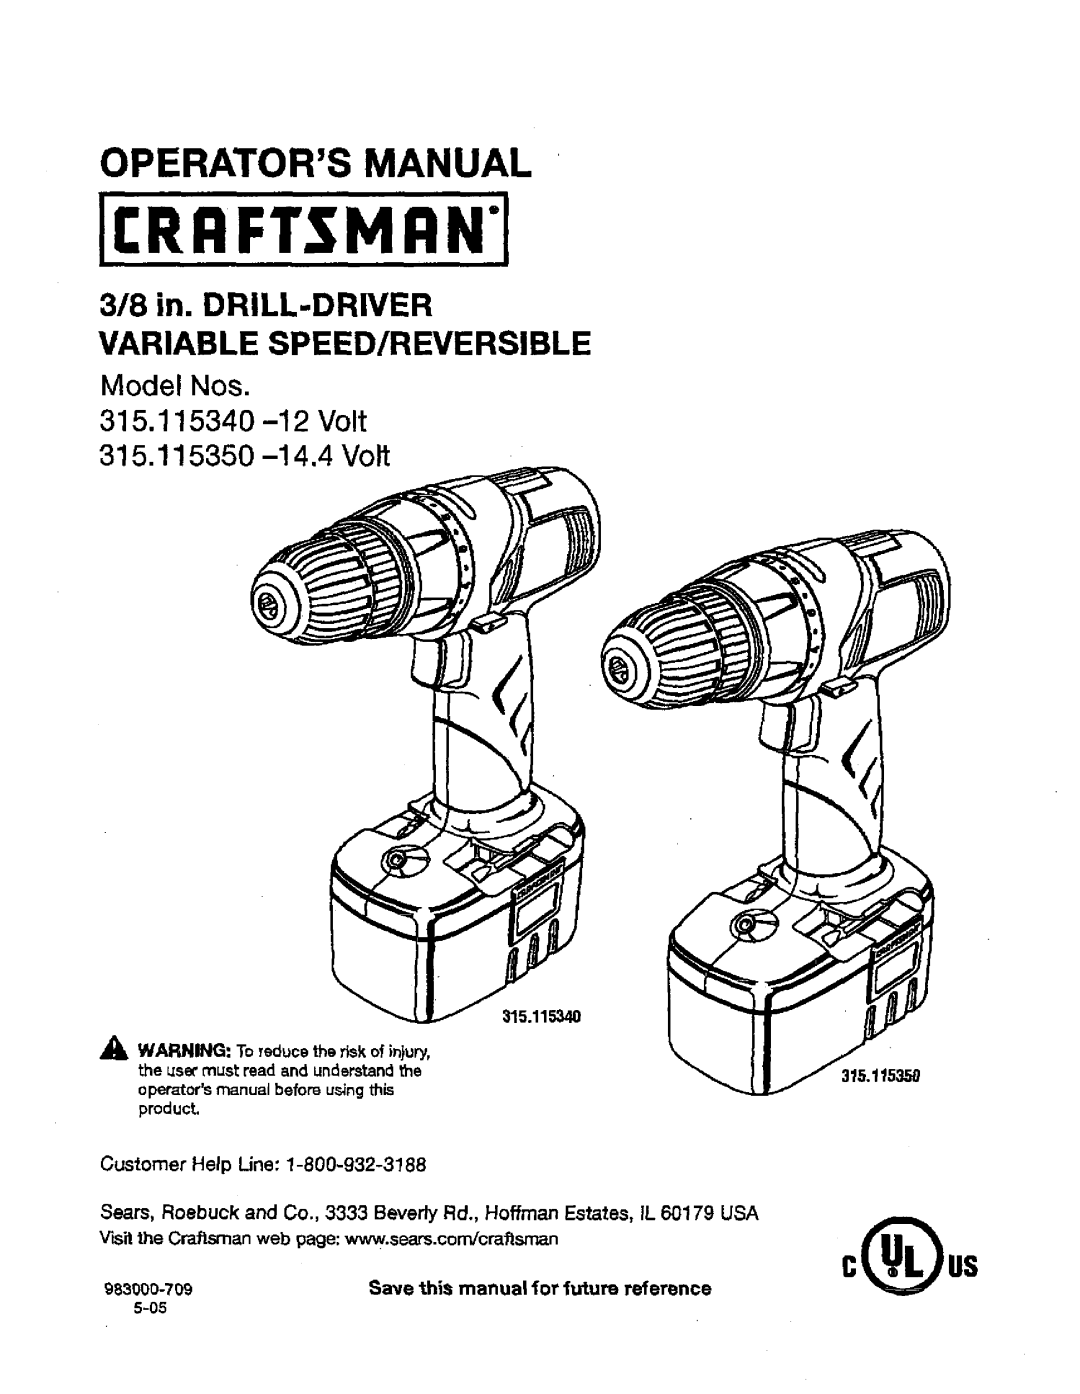 Craftsman 315, 115 manual Operators Manual, 318 in. DRILL-DRIVER VARIABLE SPEED/REVERSIBLE Model Nos, Customer Help Line 